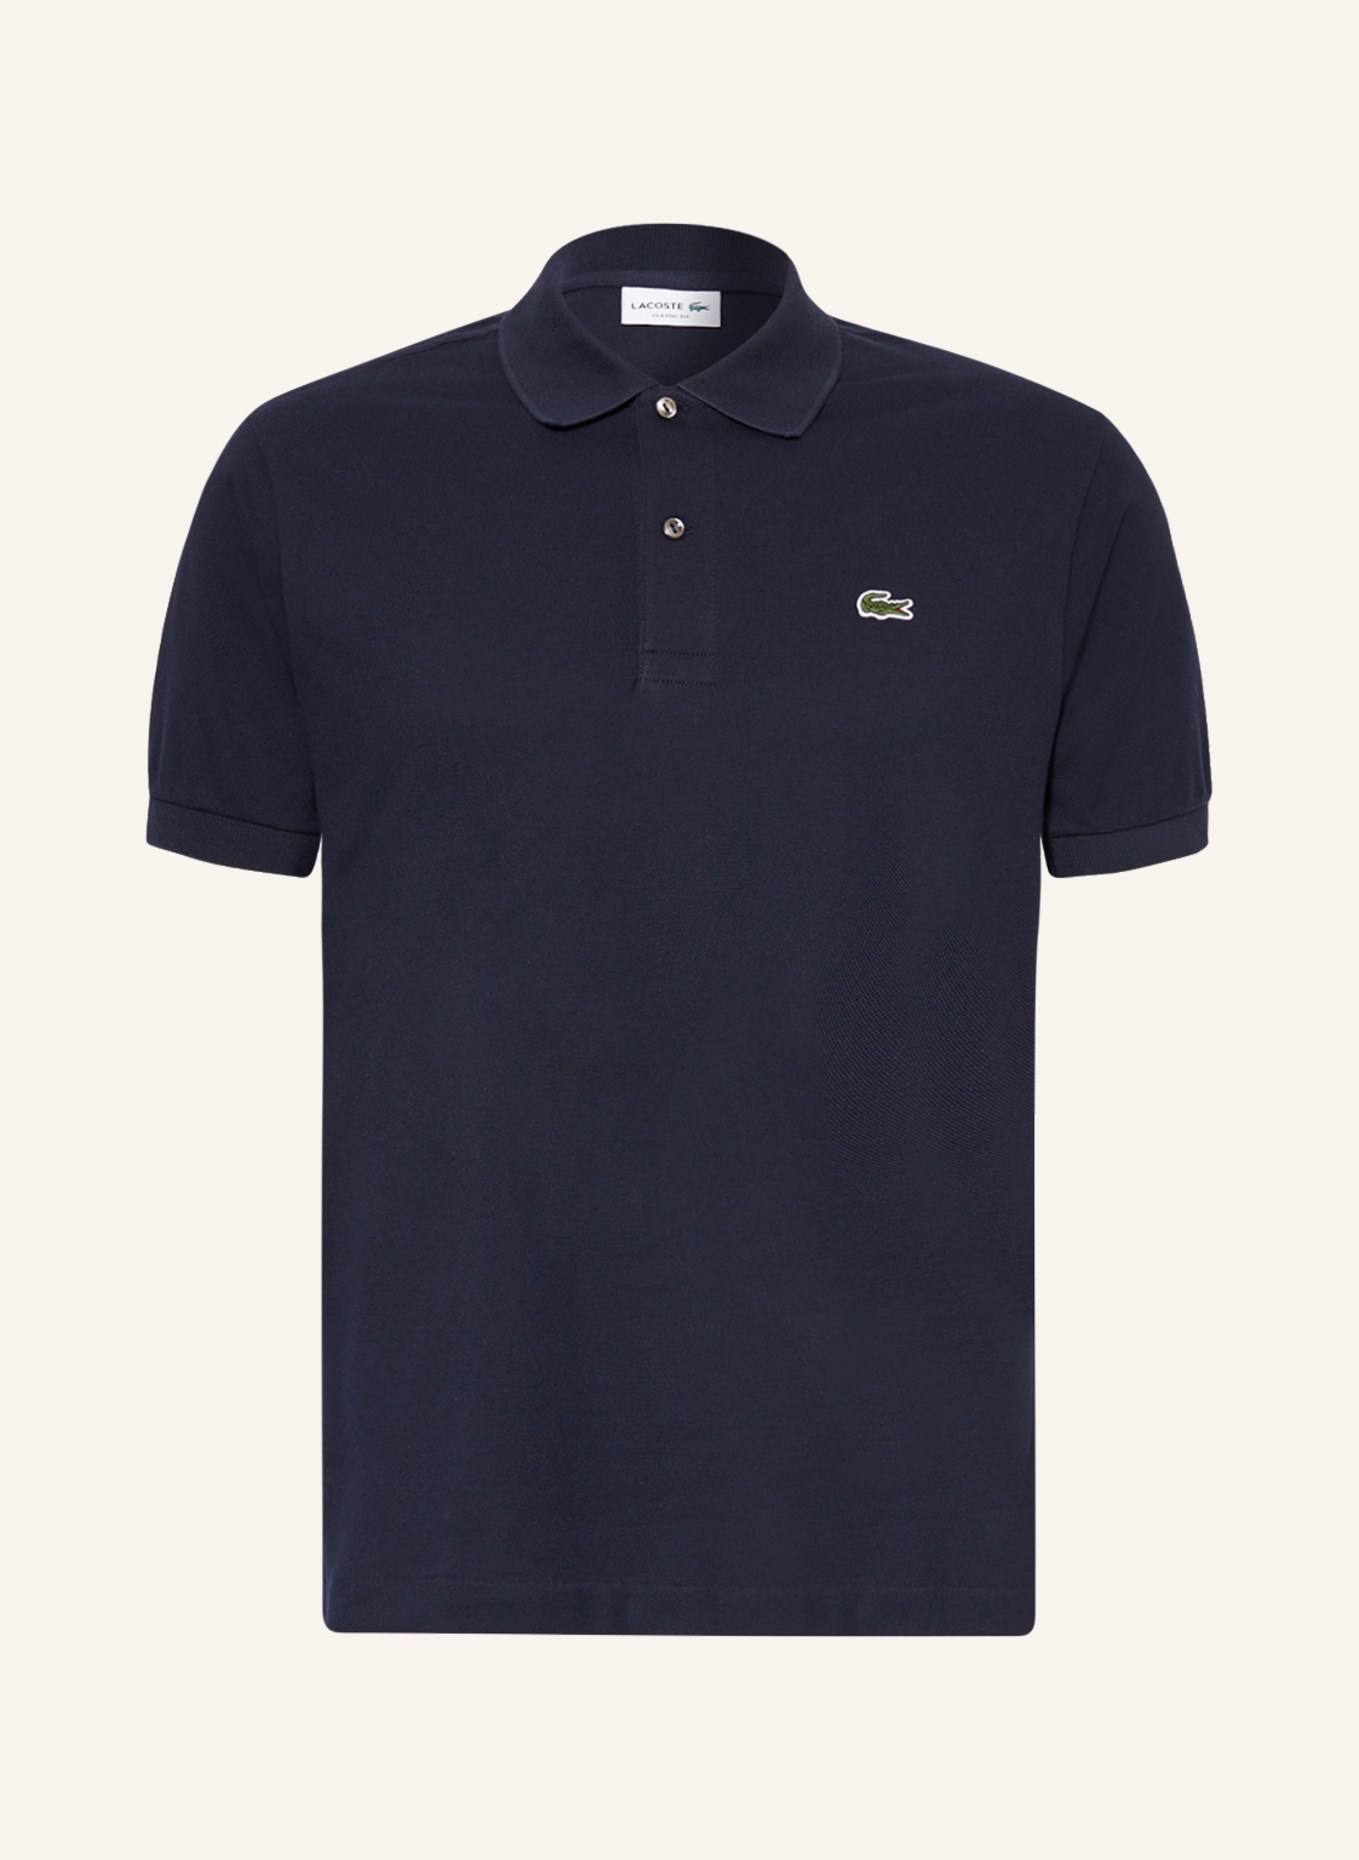 LACOSTE Piqué-Poloshirt Classic Fit, Farbe: 166 NAVY BLUE (Bild 1)